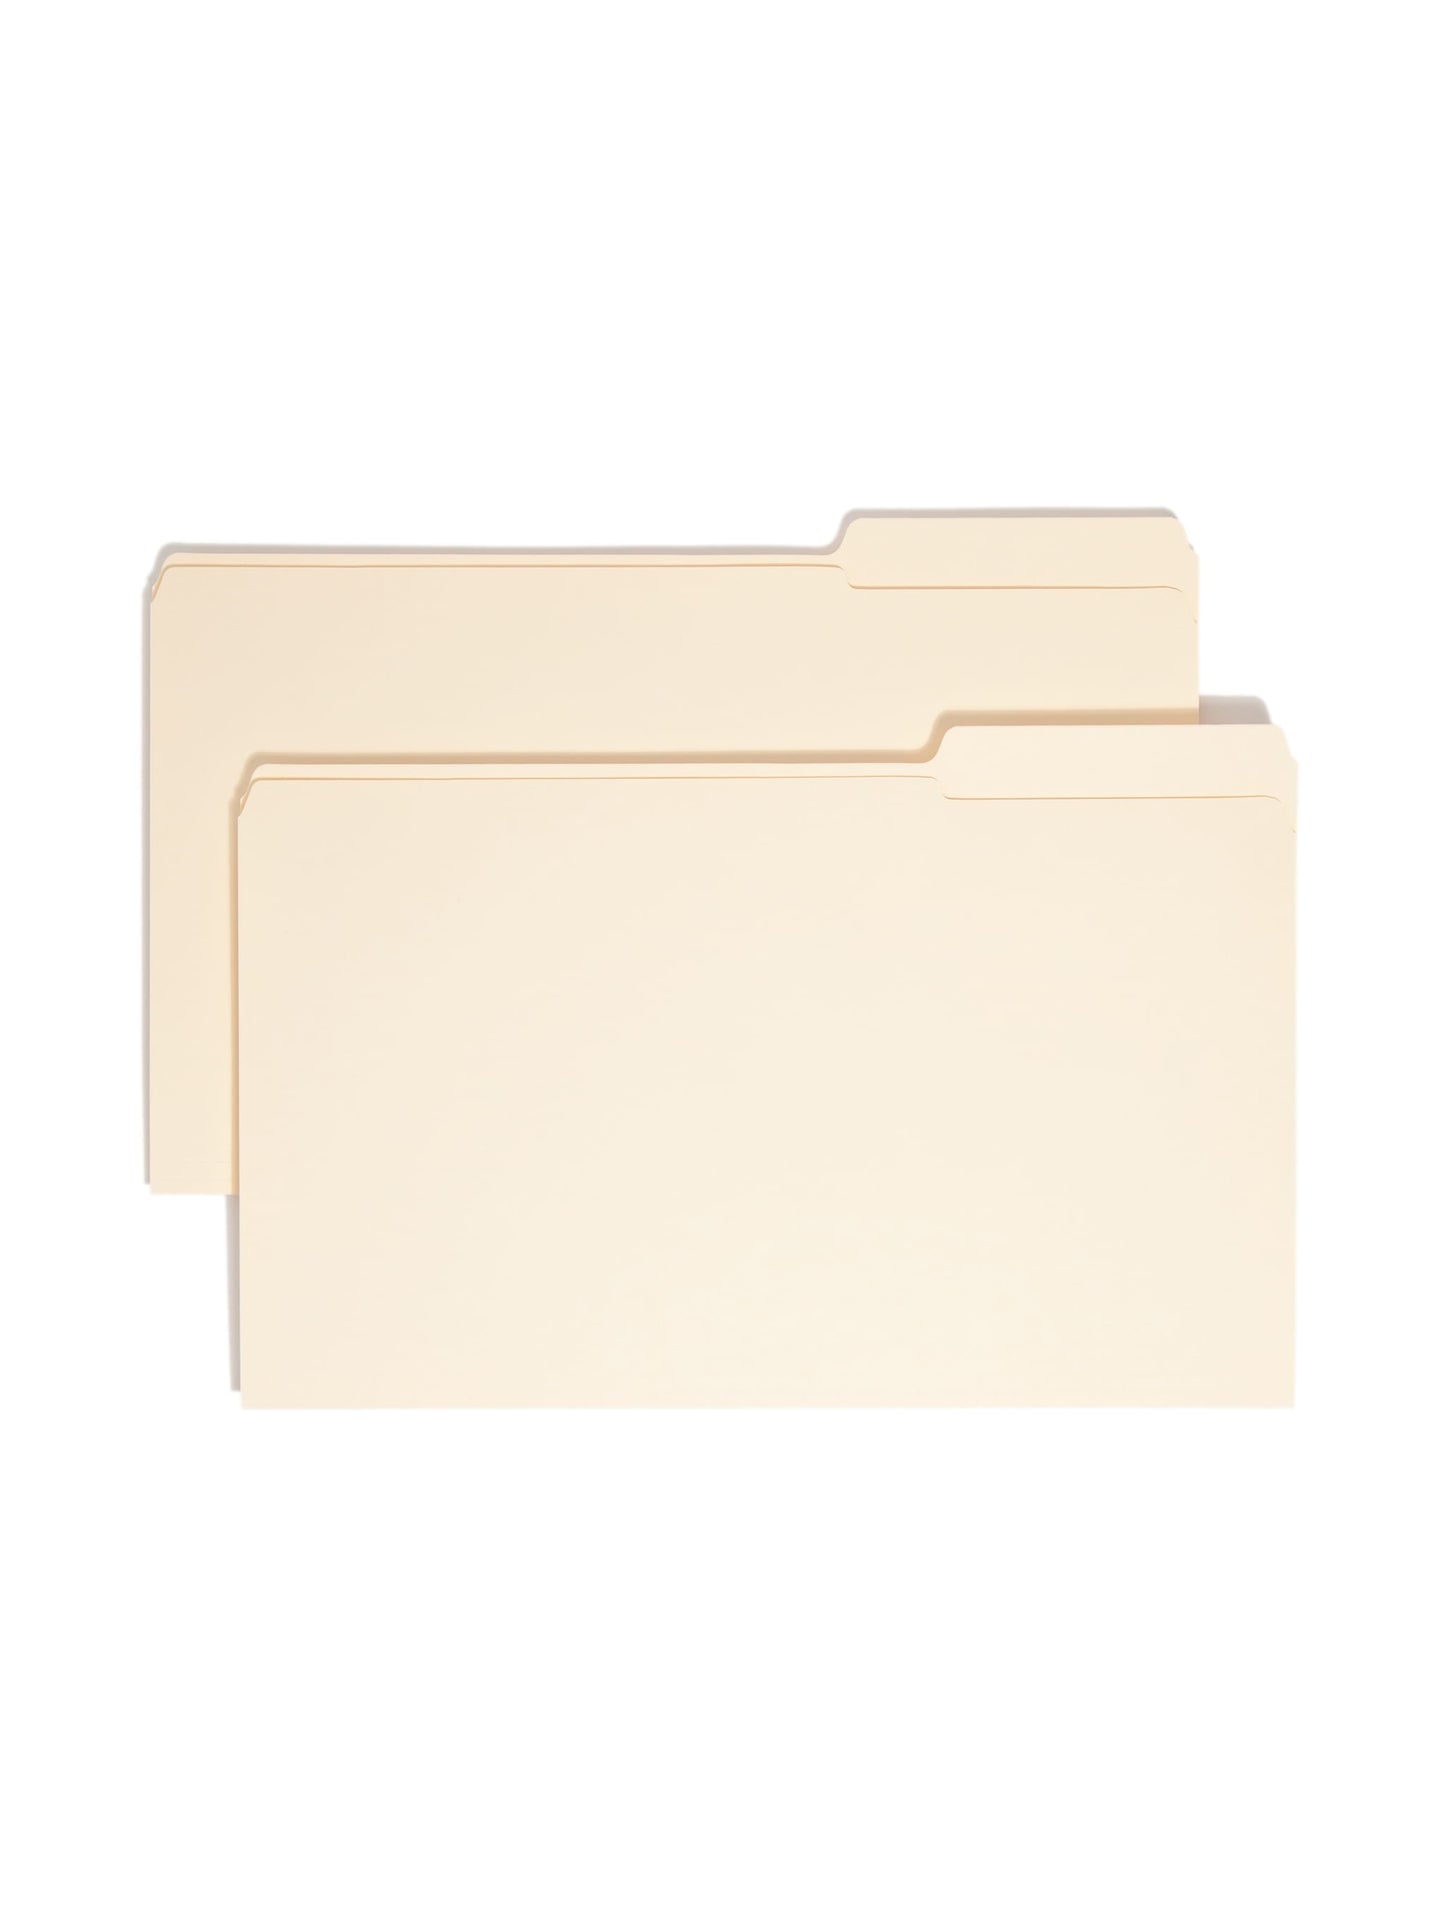 Reinforced Tab File Folders, 1/3-Cut Right Tab, Manila Color, Legal Size, Set of 100, 086486153379